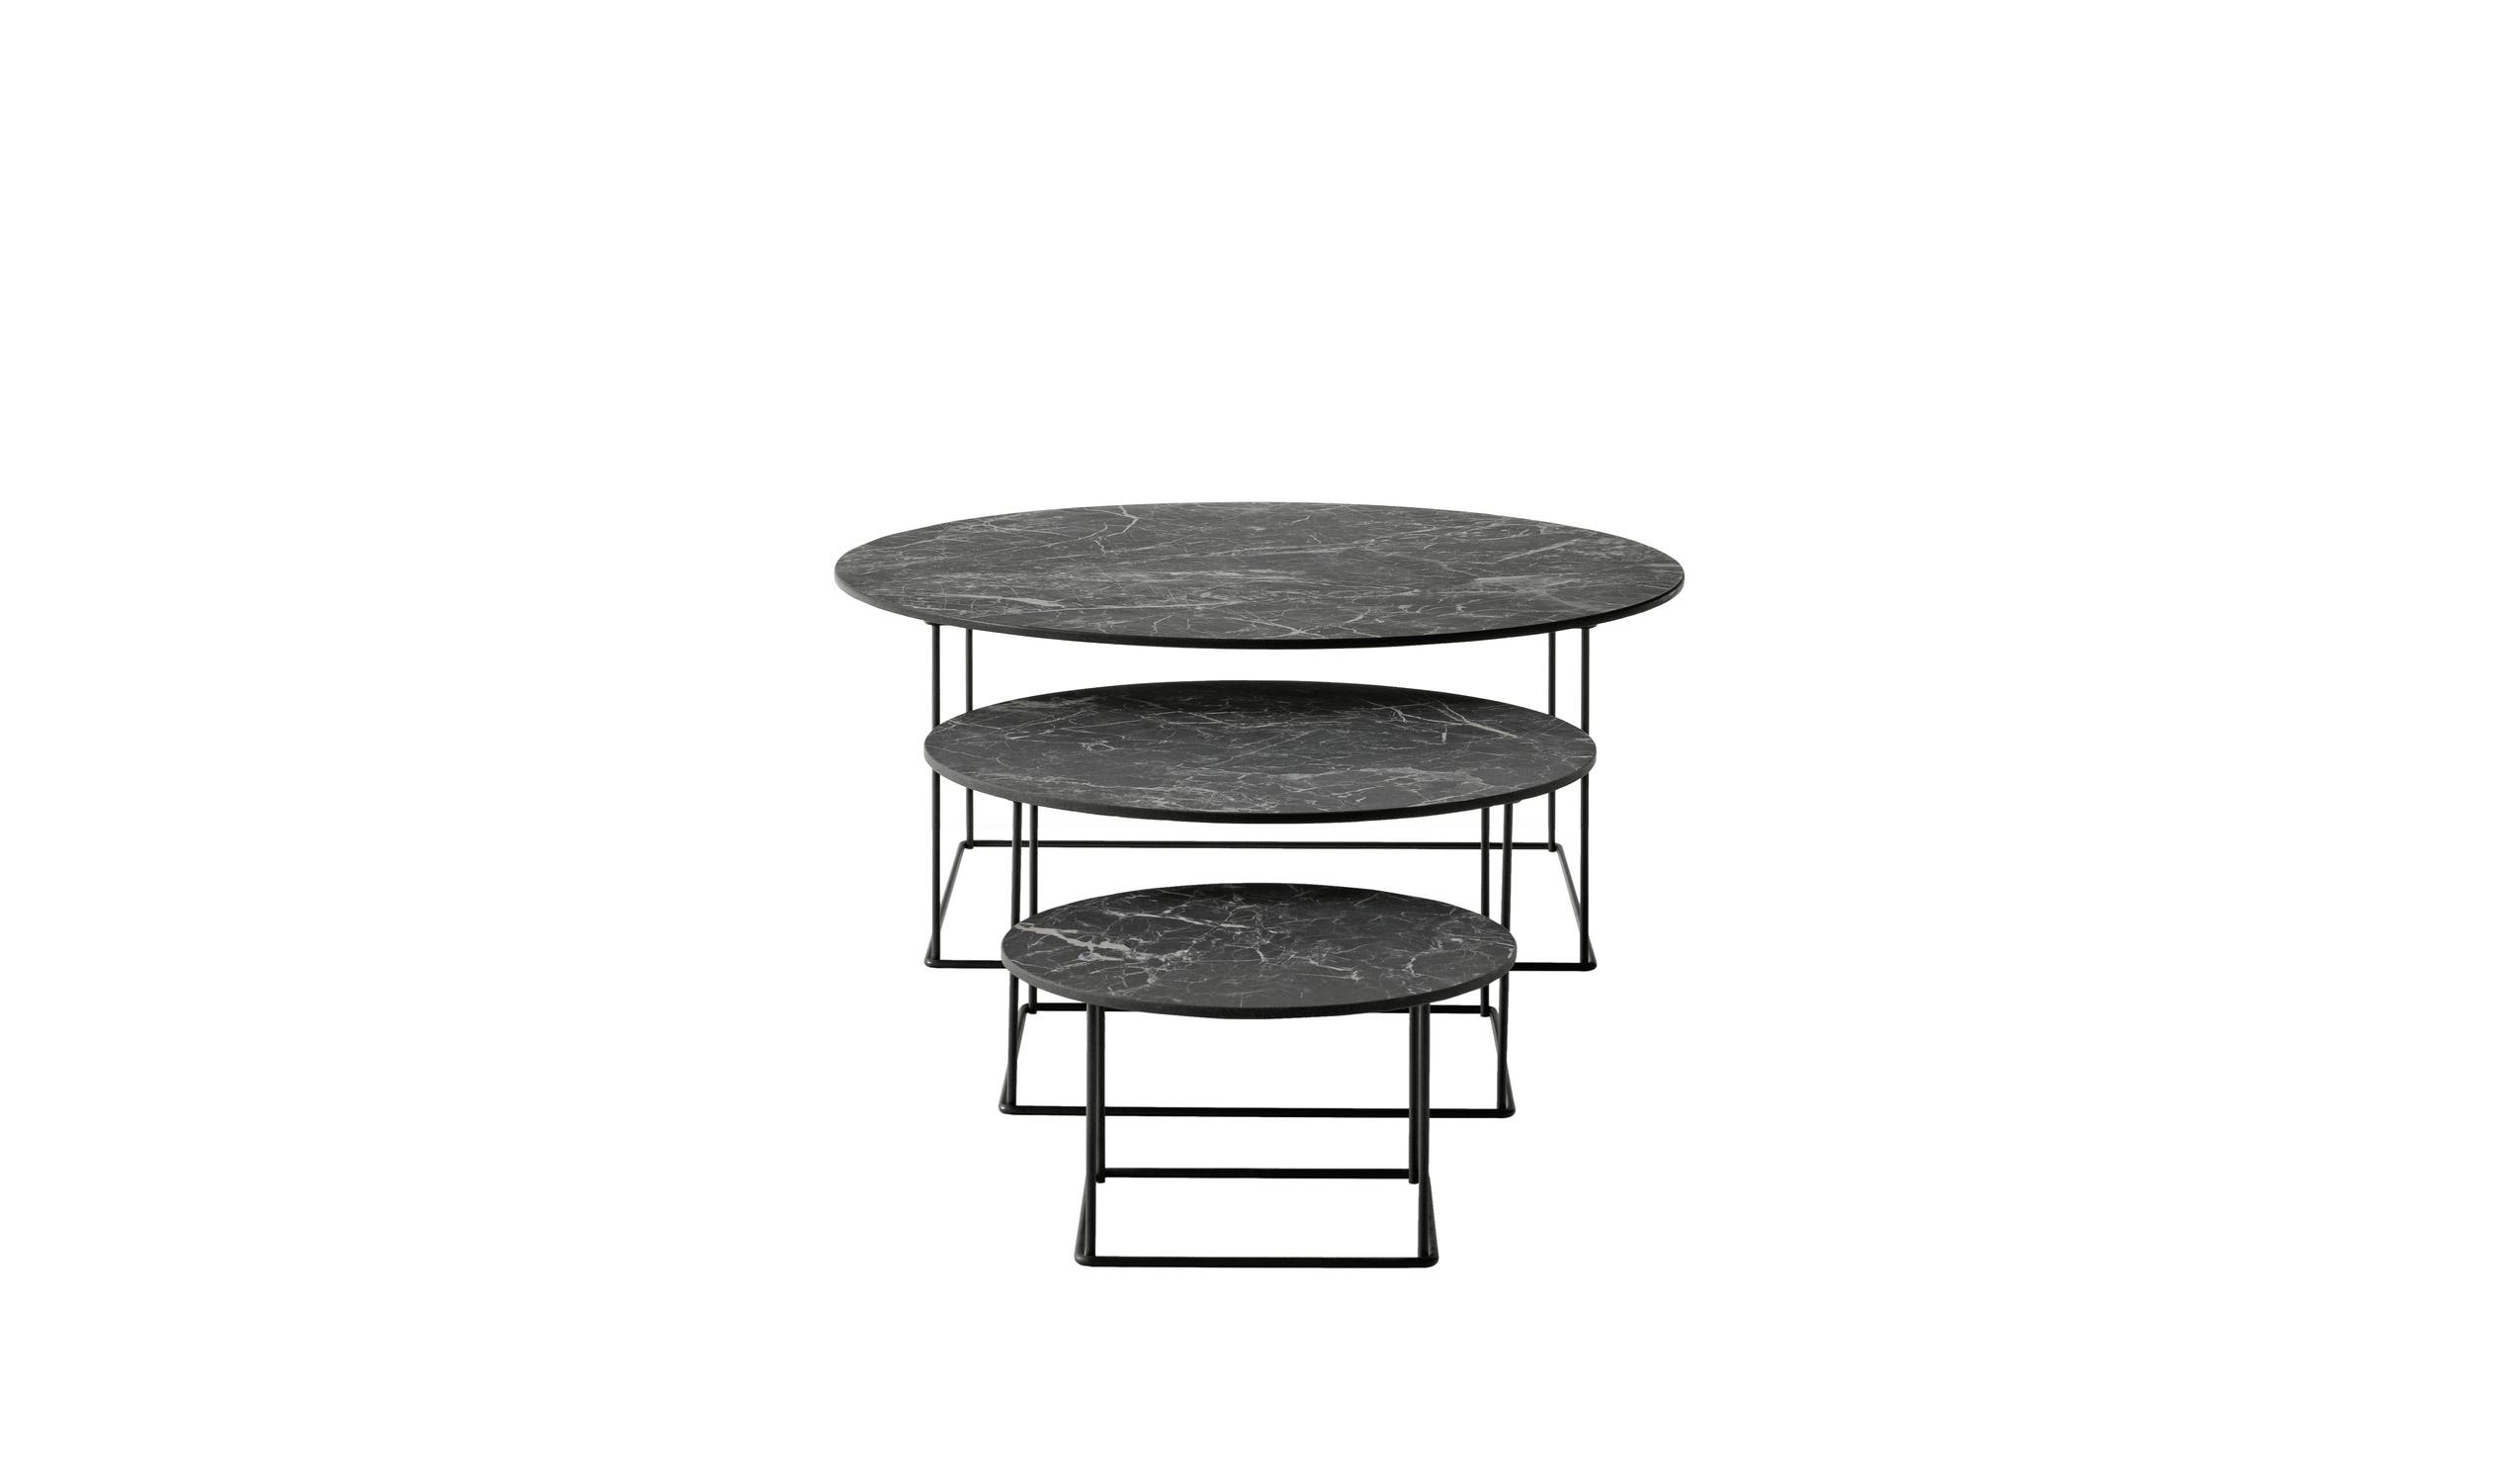 Designer italian modern small tables  - Fat-Fat Outdoor Small tables 1